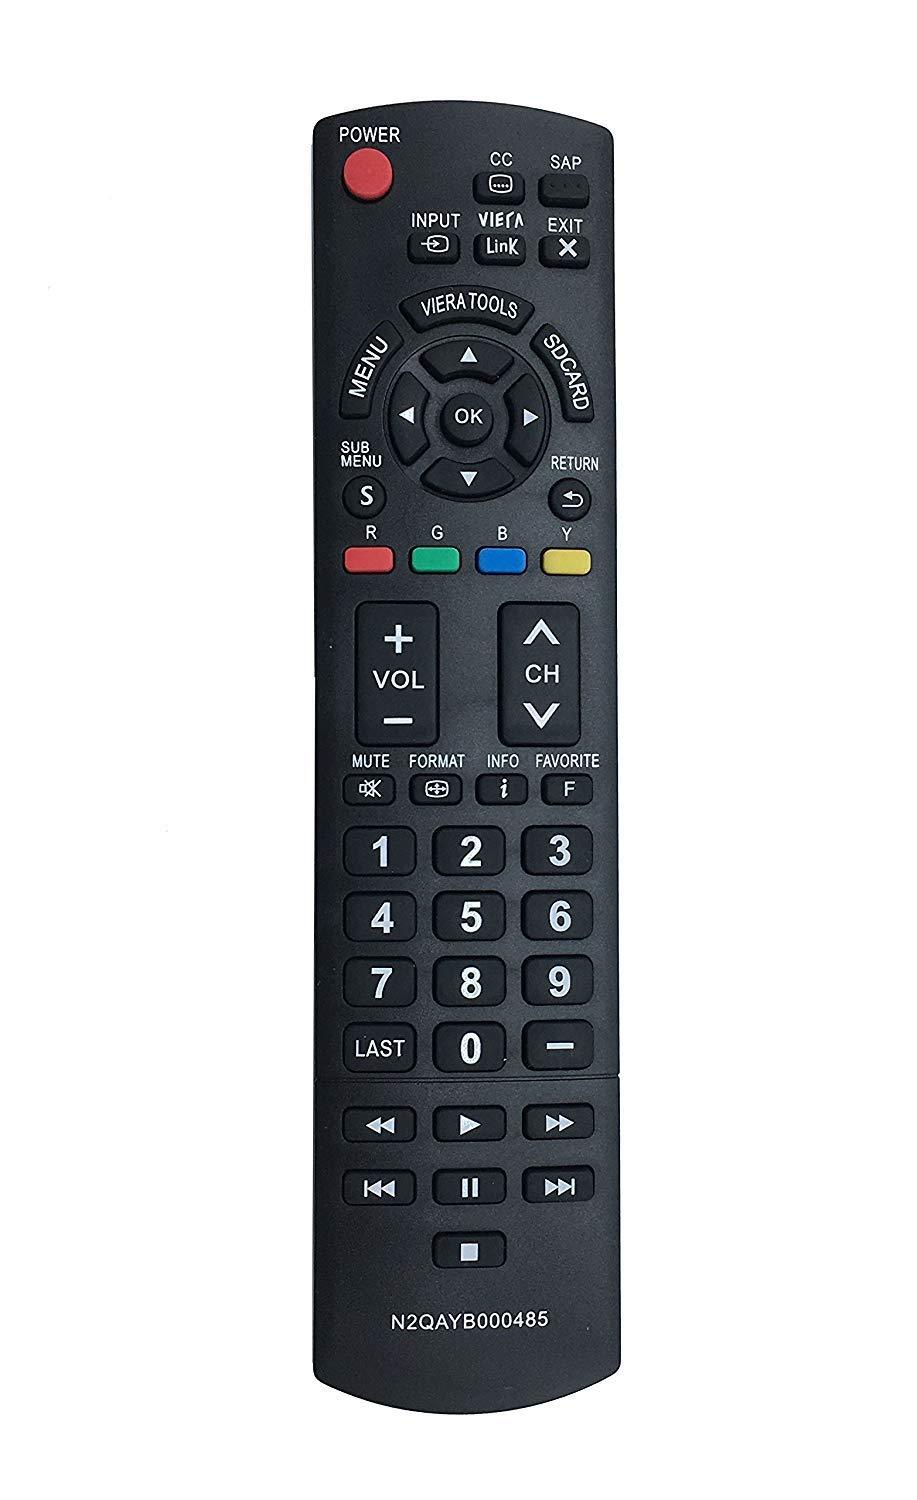 AULCMEET New Remote N2QAYB000485 Replaced Controller for PANASONIC Plasma LCD TVs TC-32LX24 TC-42LD24 TC-42LS24 TC-42PX24 TC-50PS24 TC-50PX24 TC-58PS24 TC-65PS24 TC-L22X2 TC-L32C22 TC-L32U22